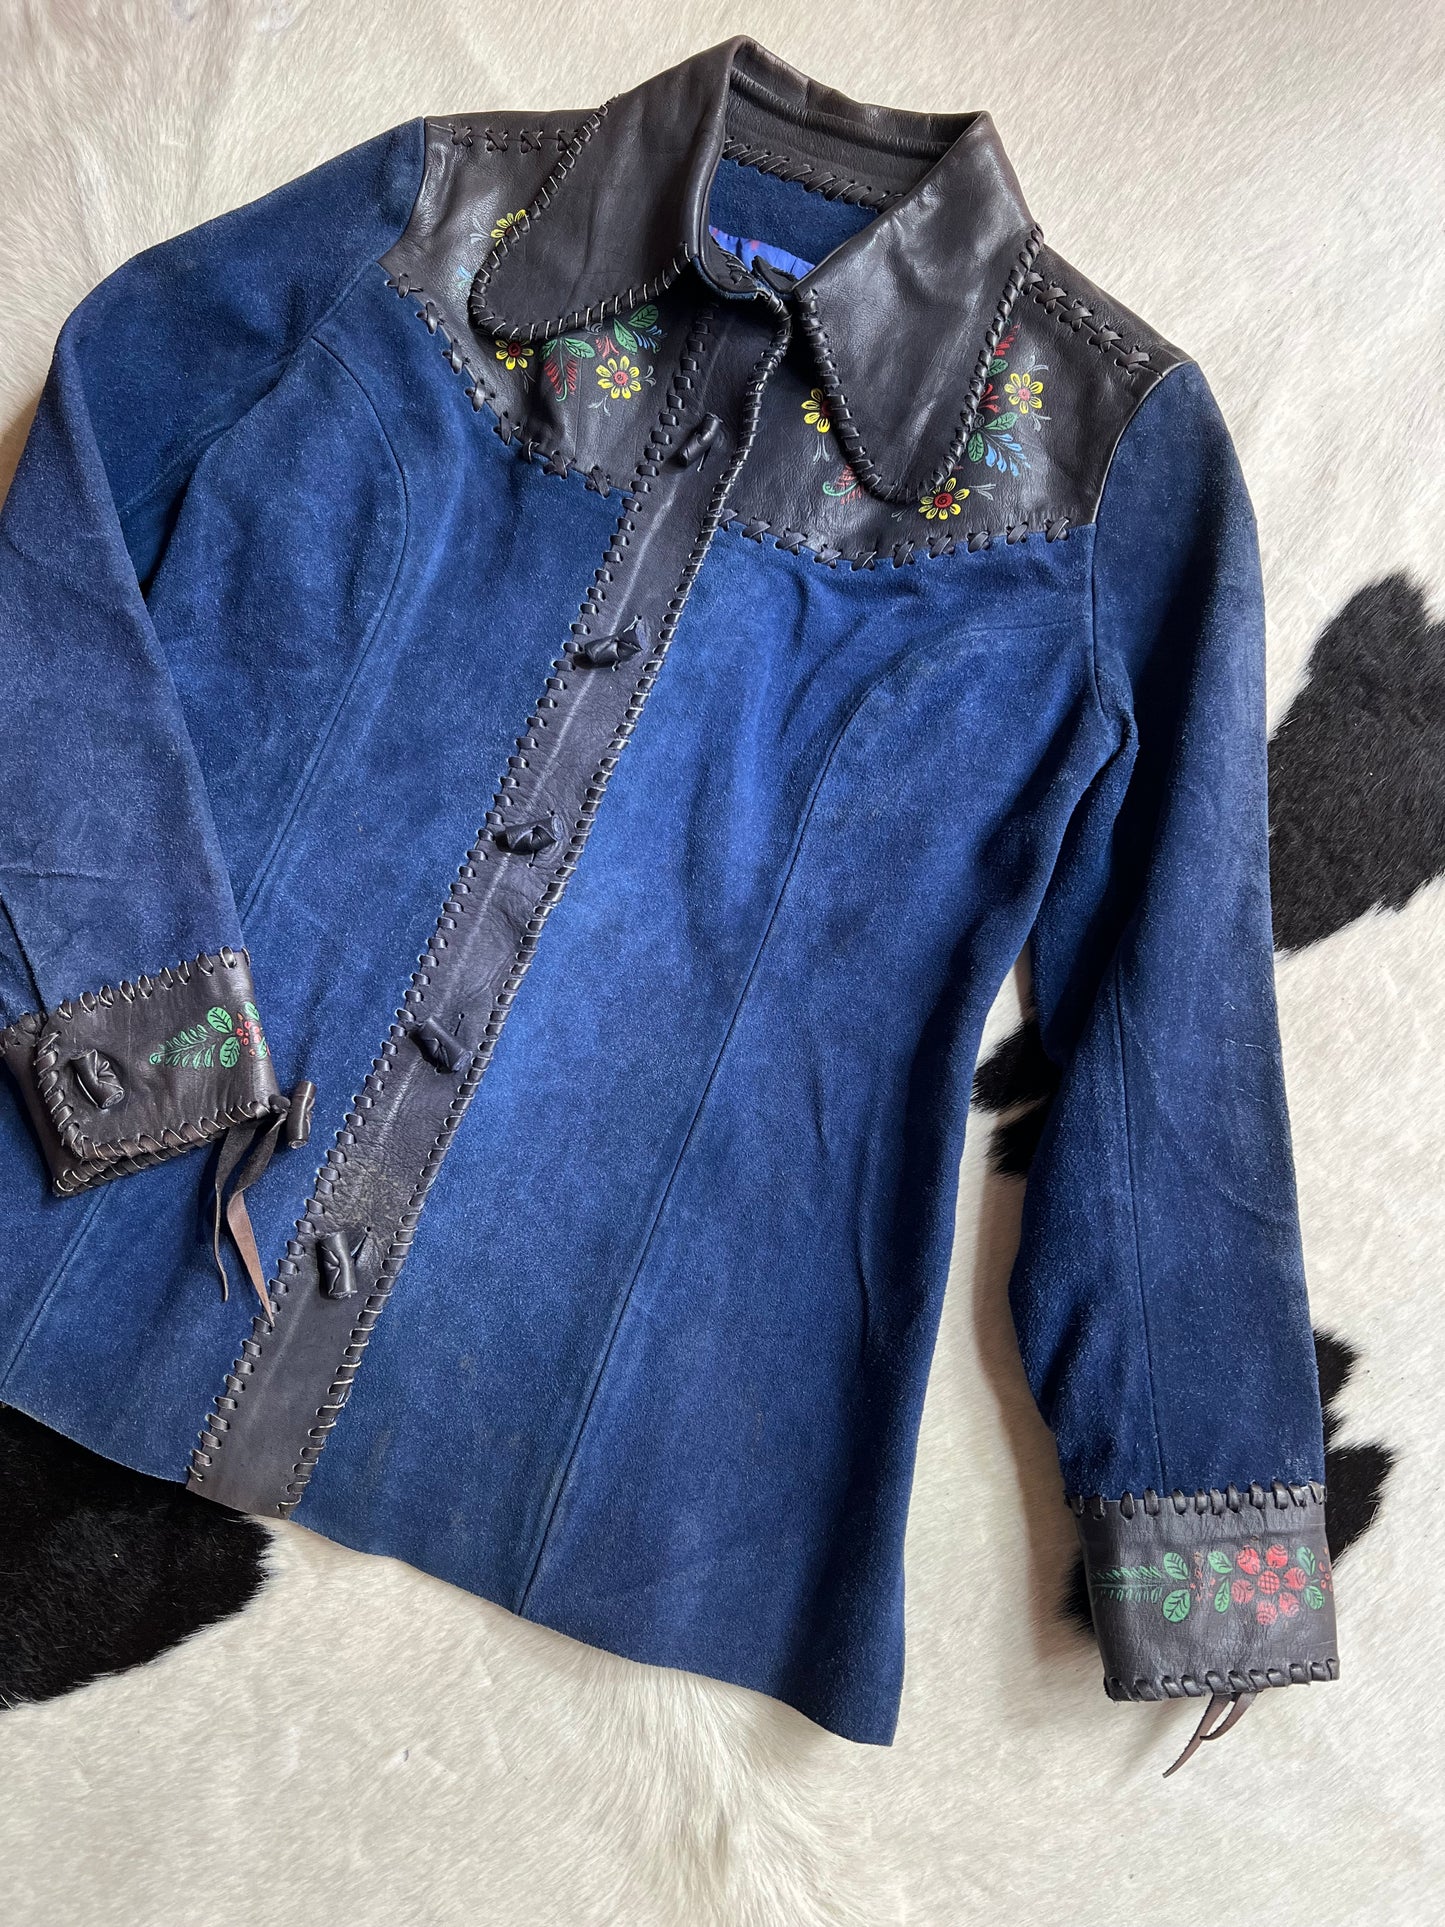 1970s CHAR blue suede jacket